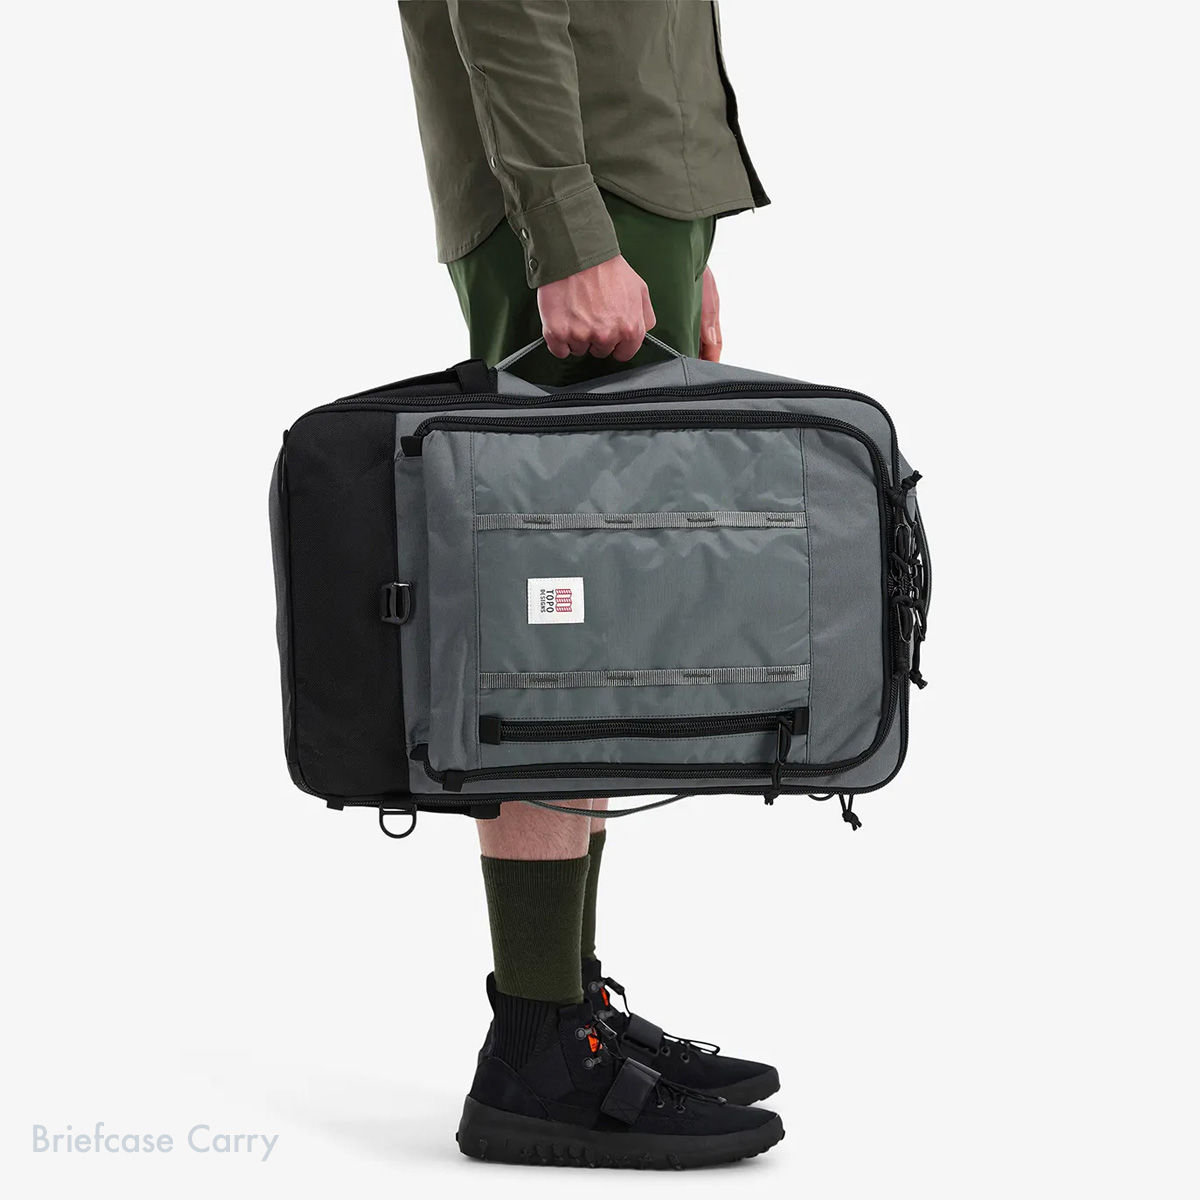 Topo Designs Global Travel Bag Briefcase Carry